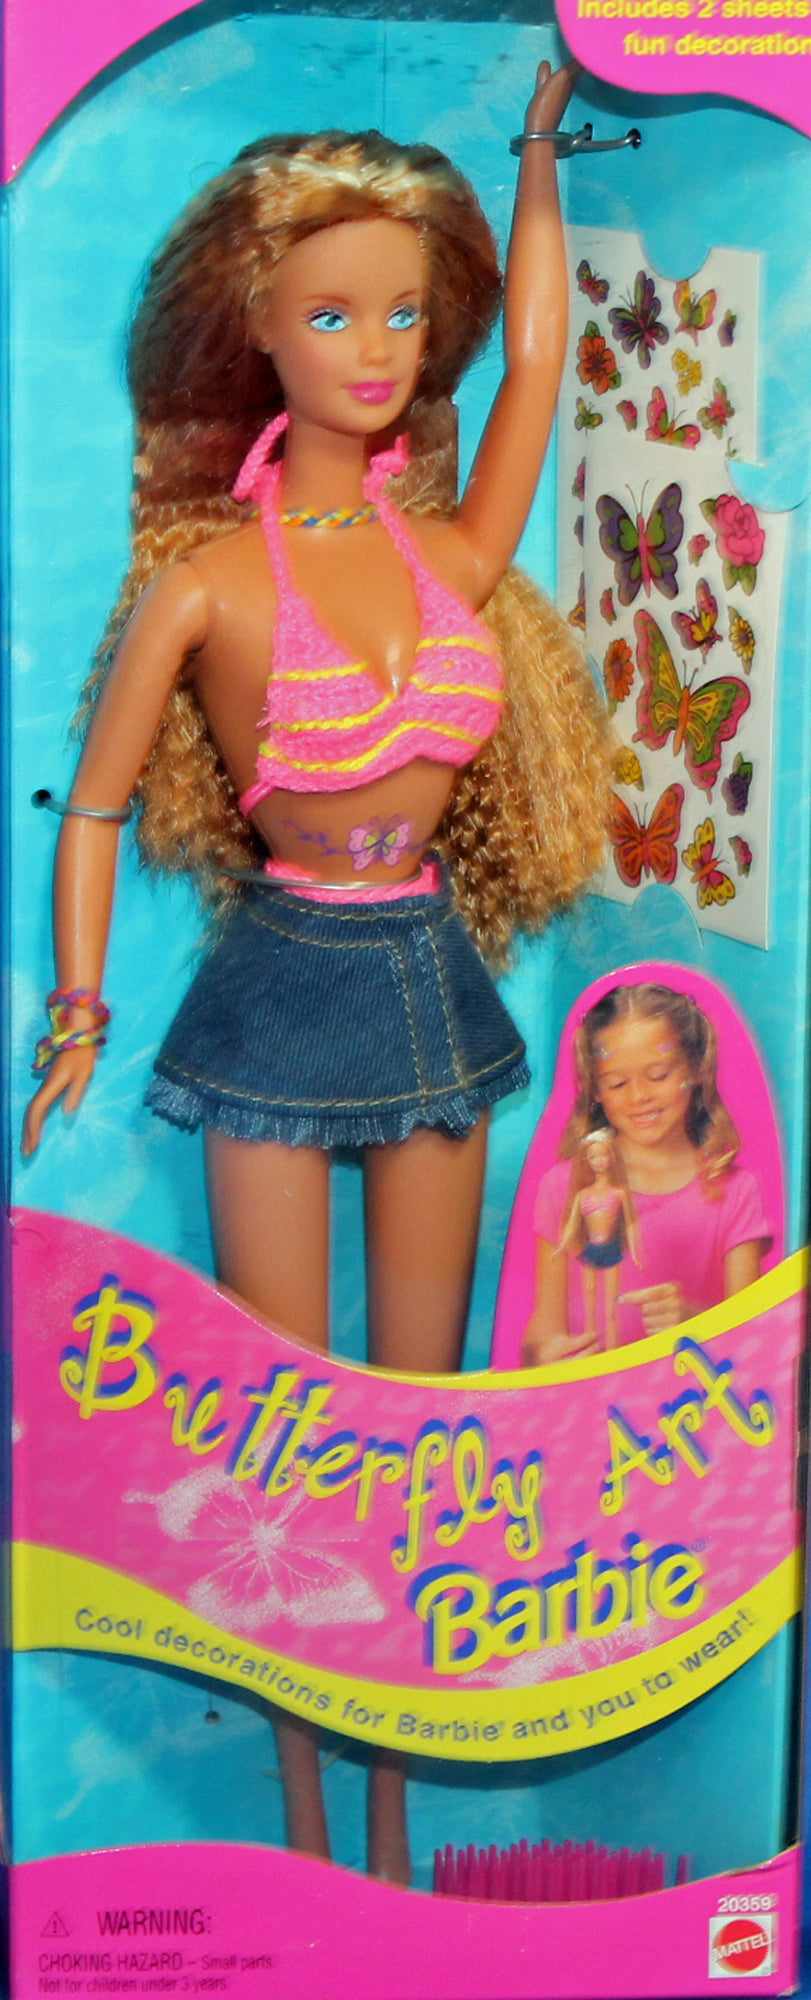 Barbie Disney's Animal Kingdom Exclusive Doll 1998 Mattel 20363 - We-R-Toys